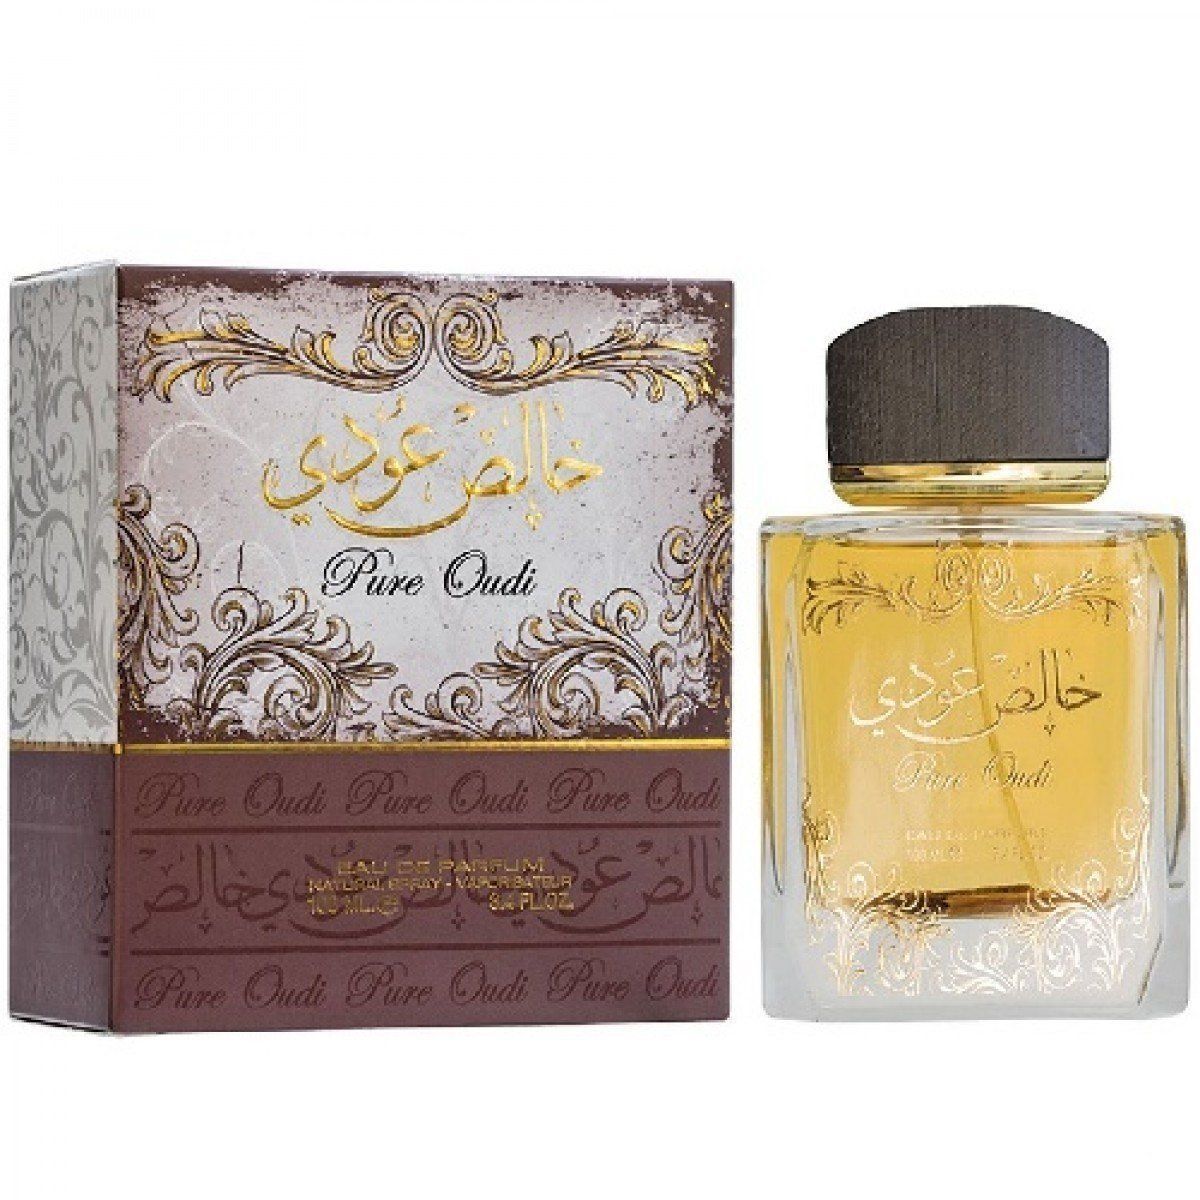 Pure Oudi EDP (100ml) perfume spray by Lattafa